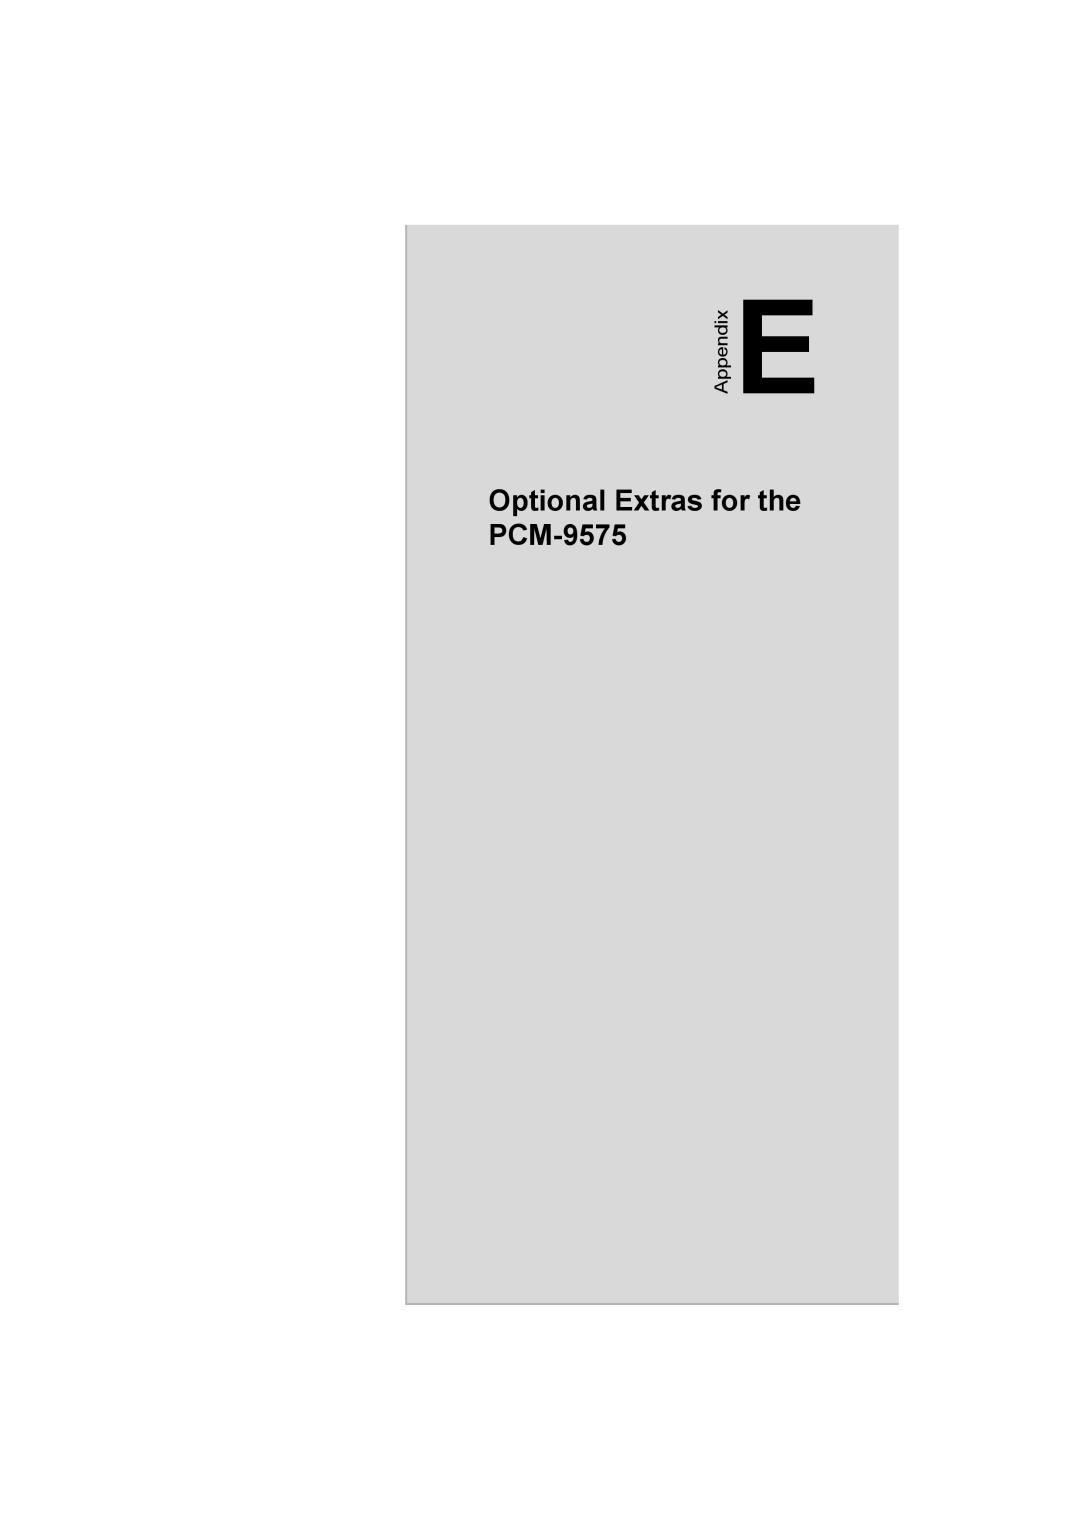 IBM 100/10 user manual Optional Extras for the PCM-9575, Appendix, Appx.E 